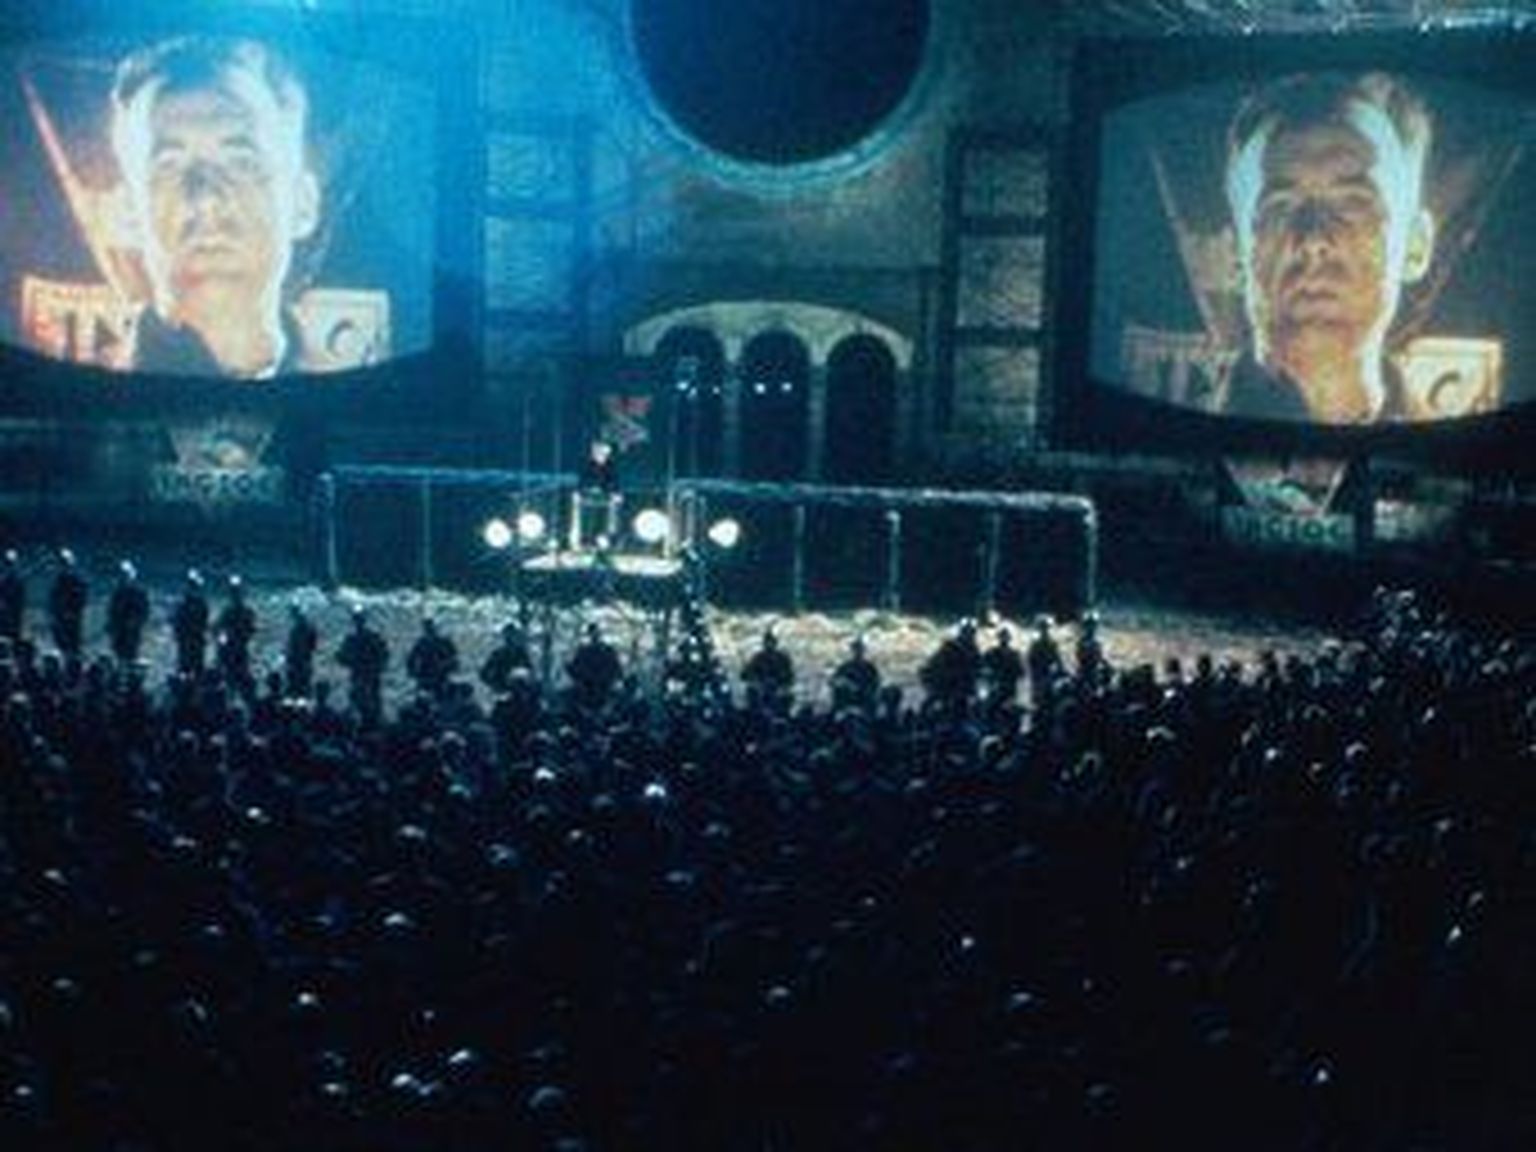 Кадр из фильма "1984" 1984 года